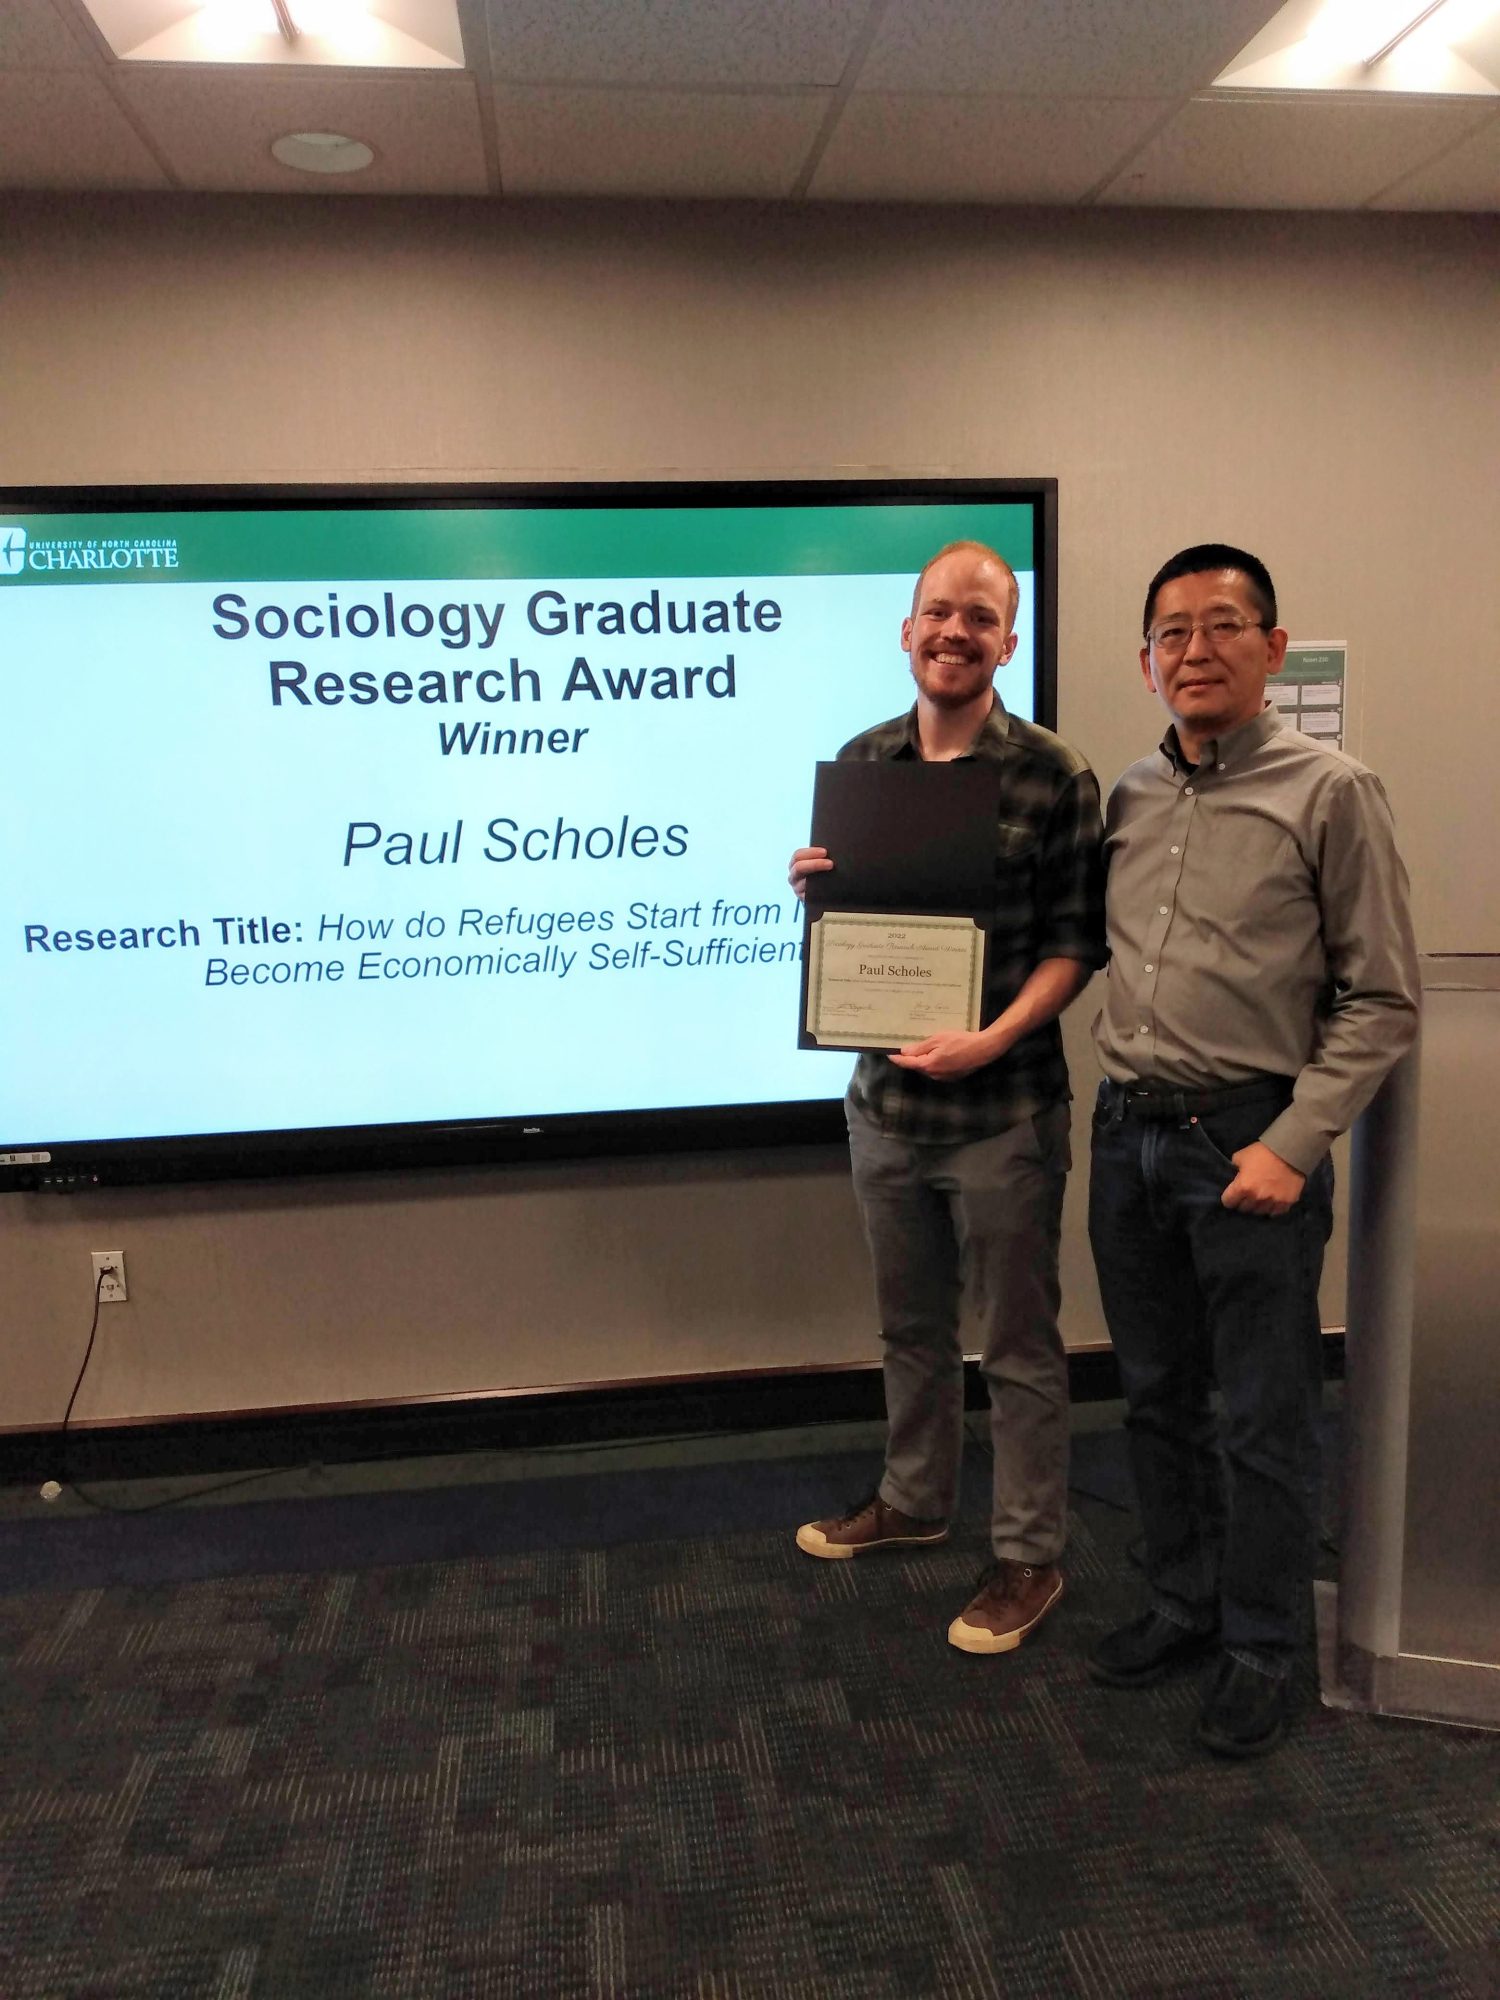 Paul Scholes, winner of the Sociology Graduate Research Award, with the Graduate Program Coordinator Dr. Yang Cao.